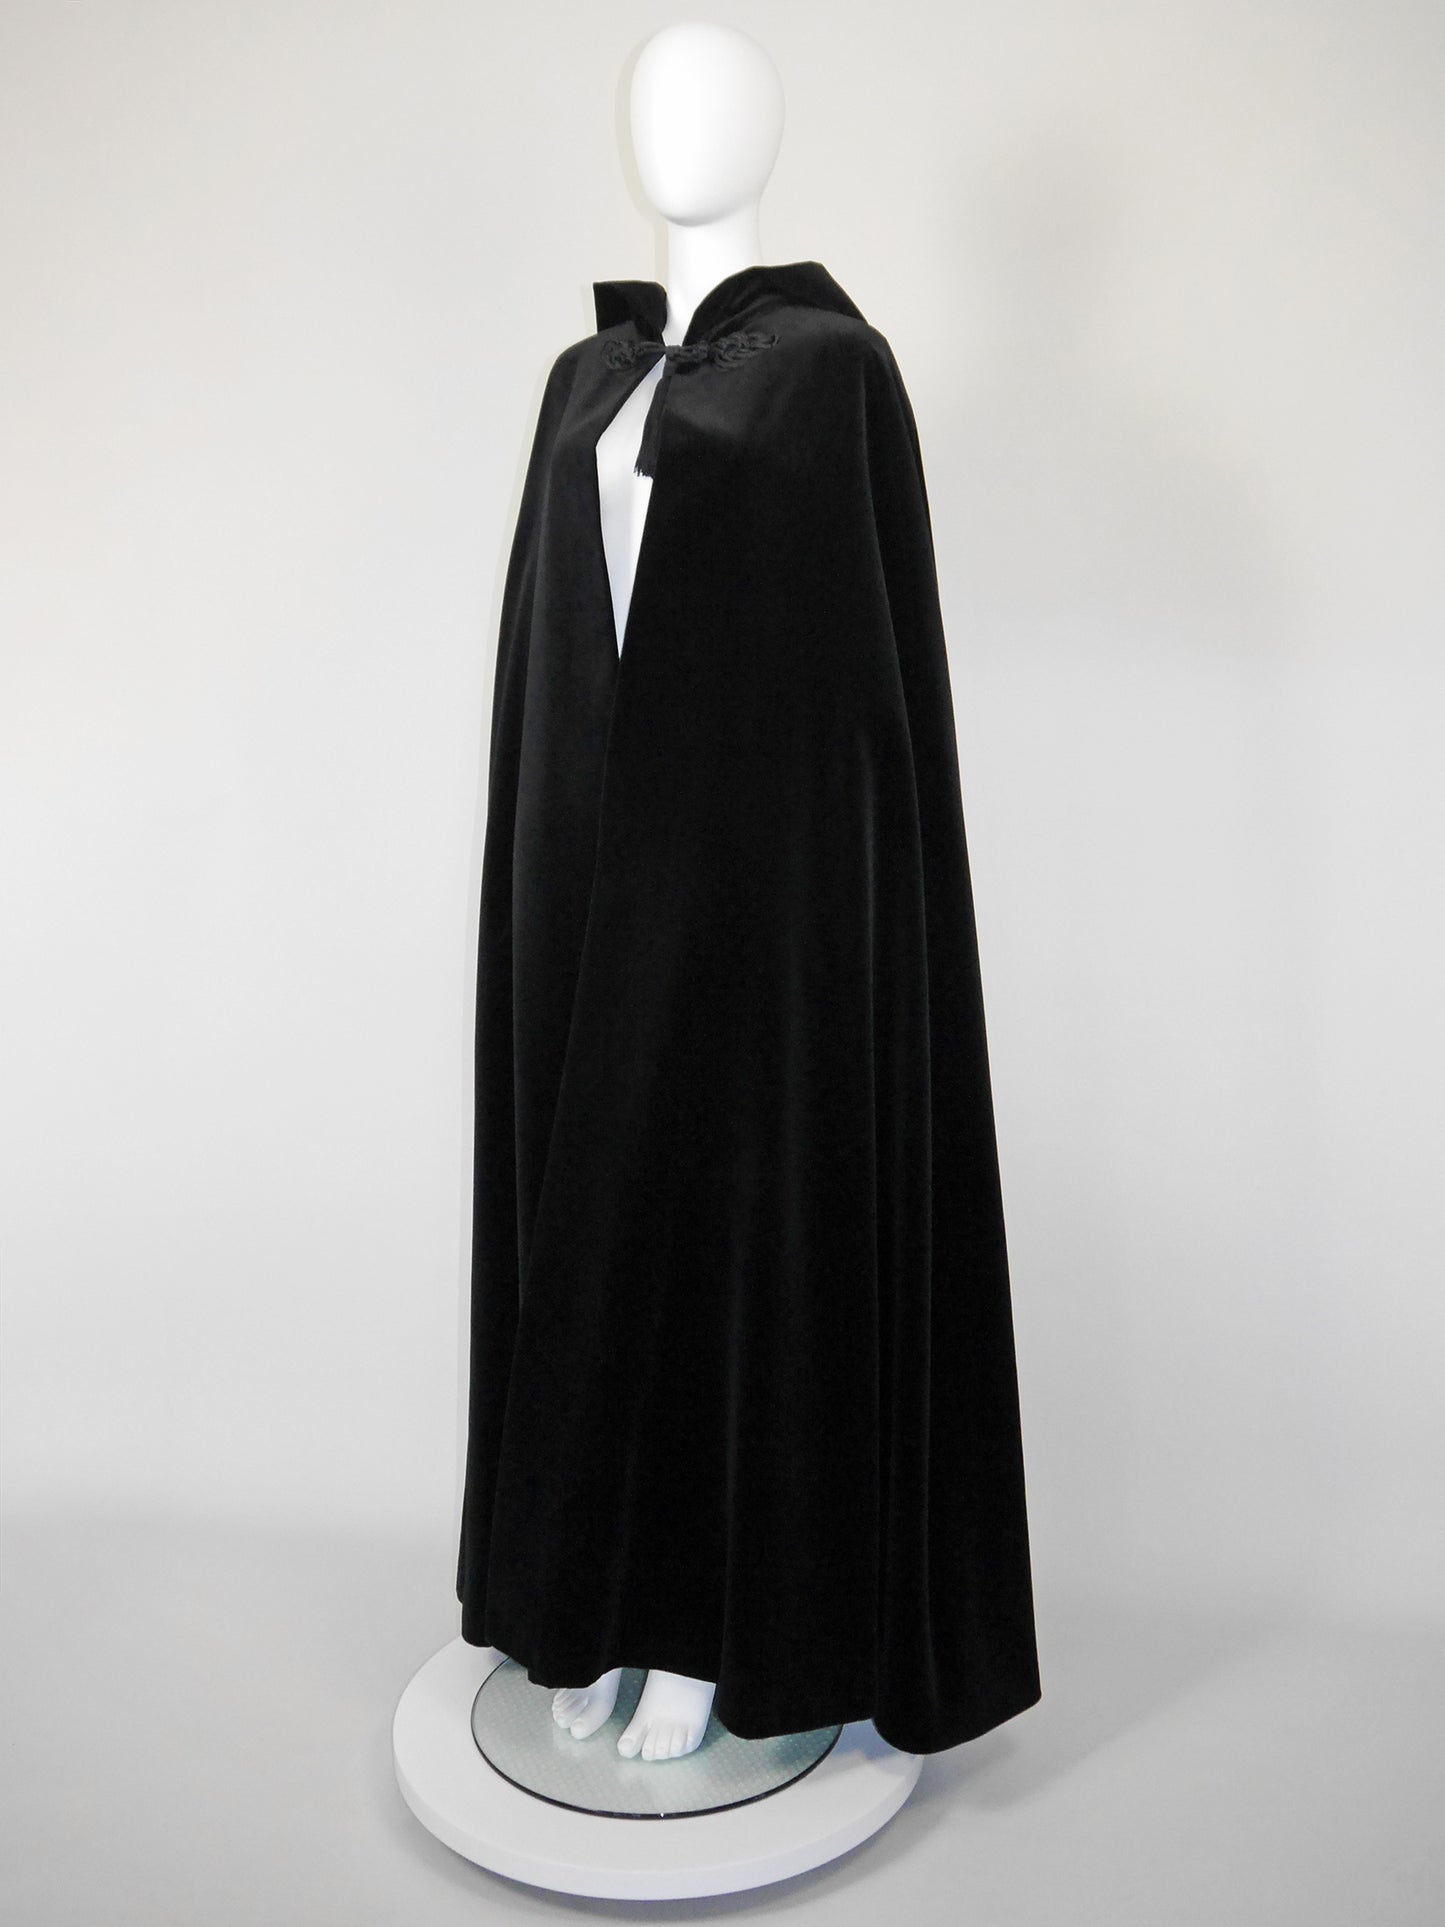 YVES SAINT LAURENT 1970s Vintage Black Velvet Hooded Maxi Cape Passementerie Size S